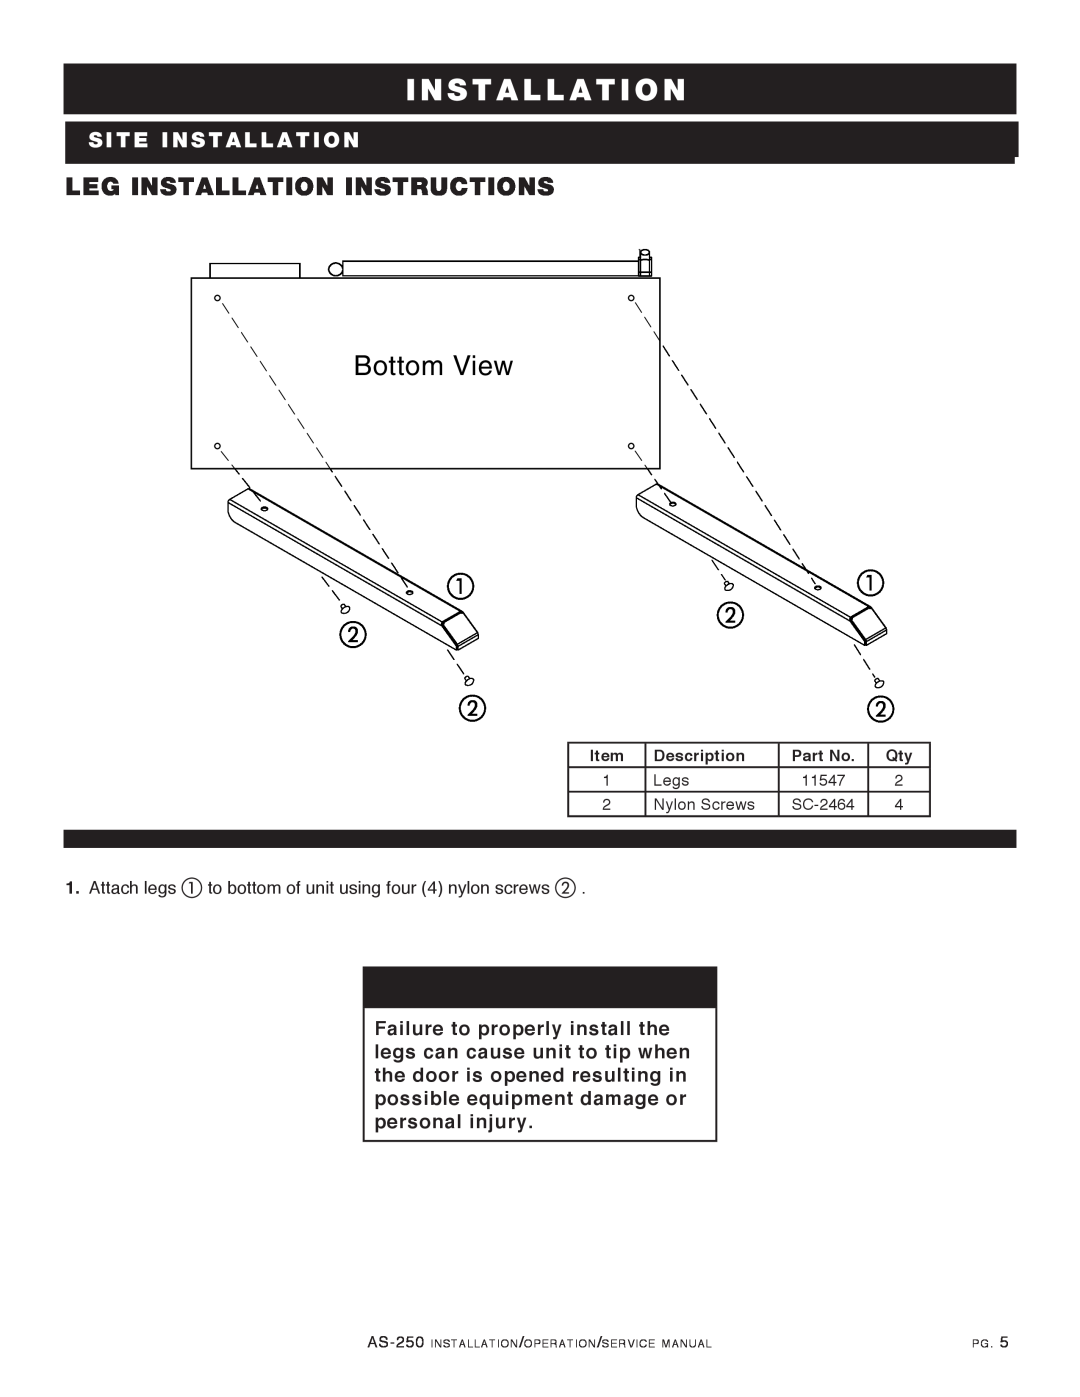 Alto-Shaam AS-250 Leg Installation Instructions, Attach legs a to bottom of unit using four 4 nylon screws b, Bottom View 